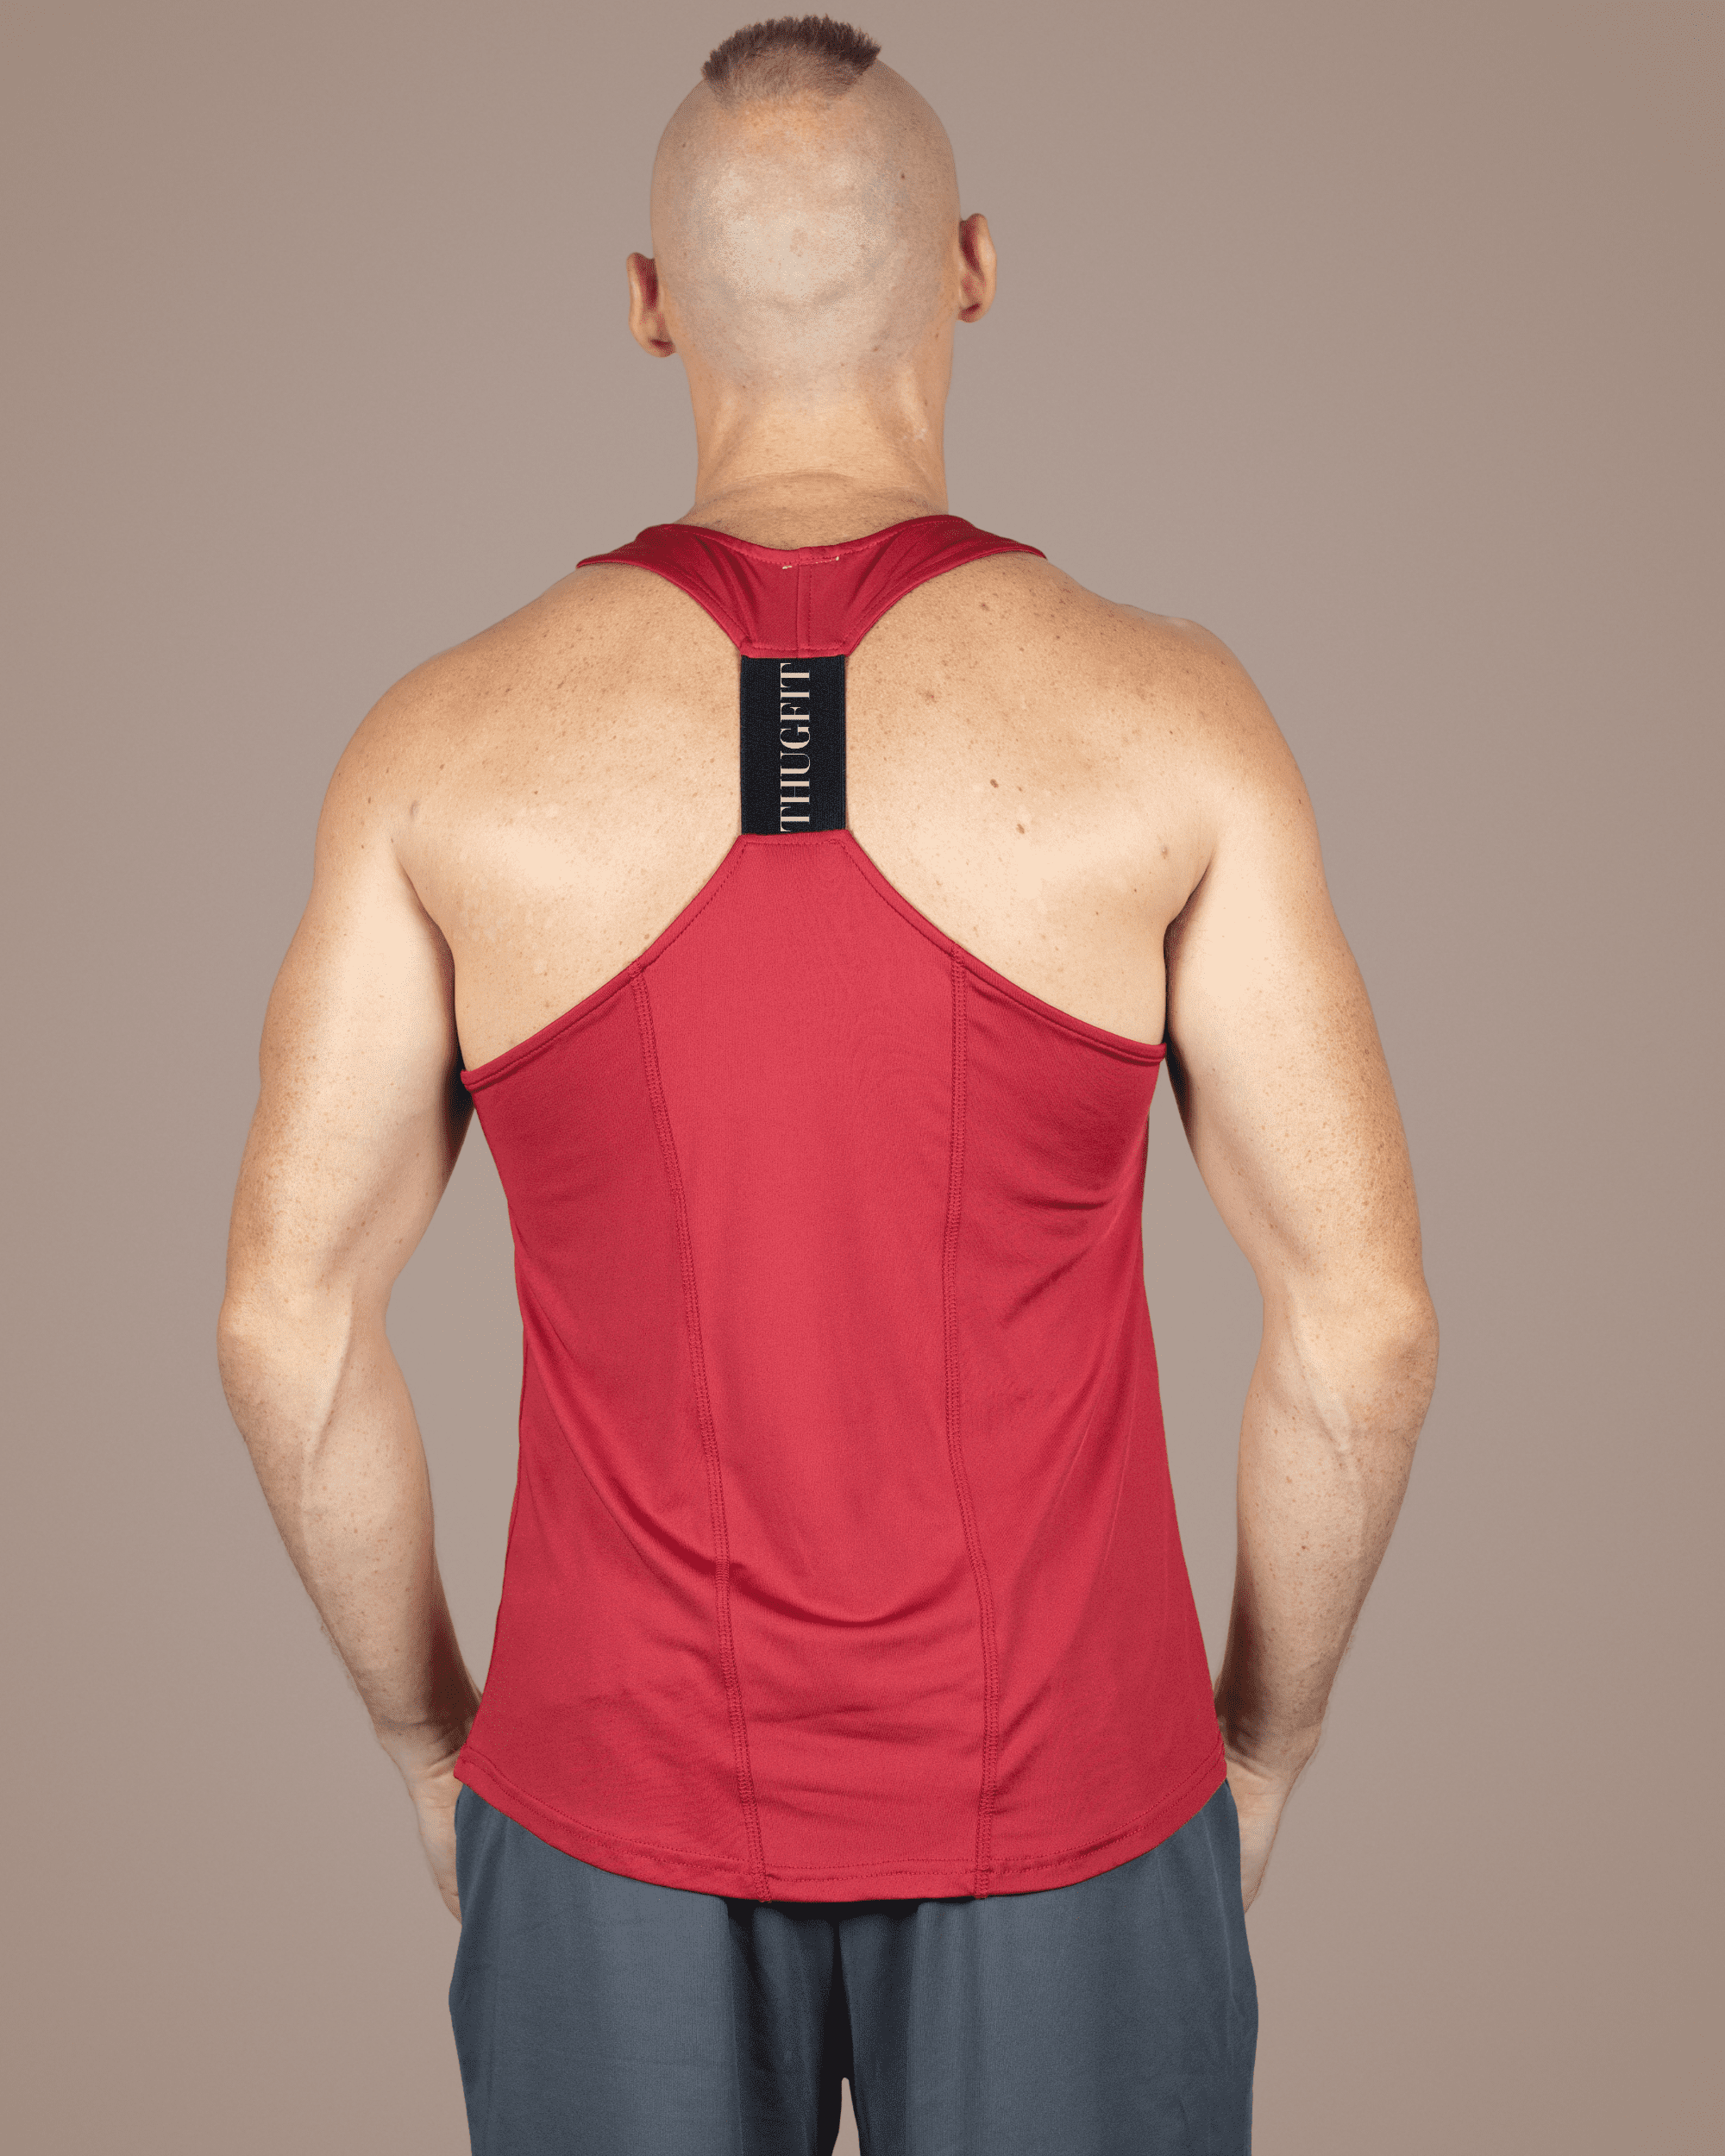 MuscleHustle Men's Slim Fit Tank Top - Red - THUGFIT